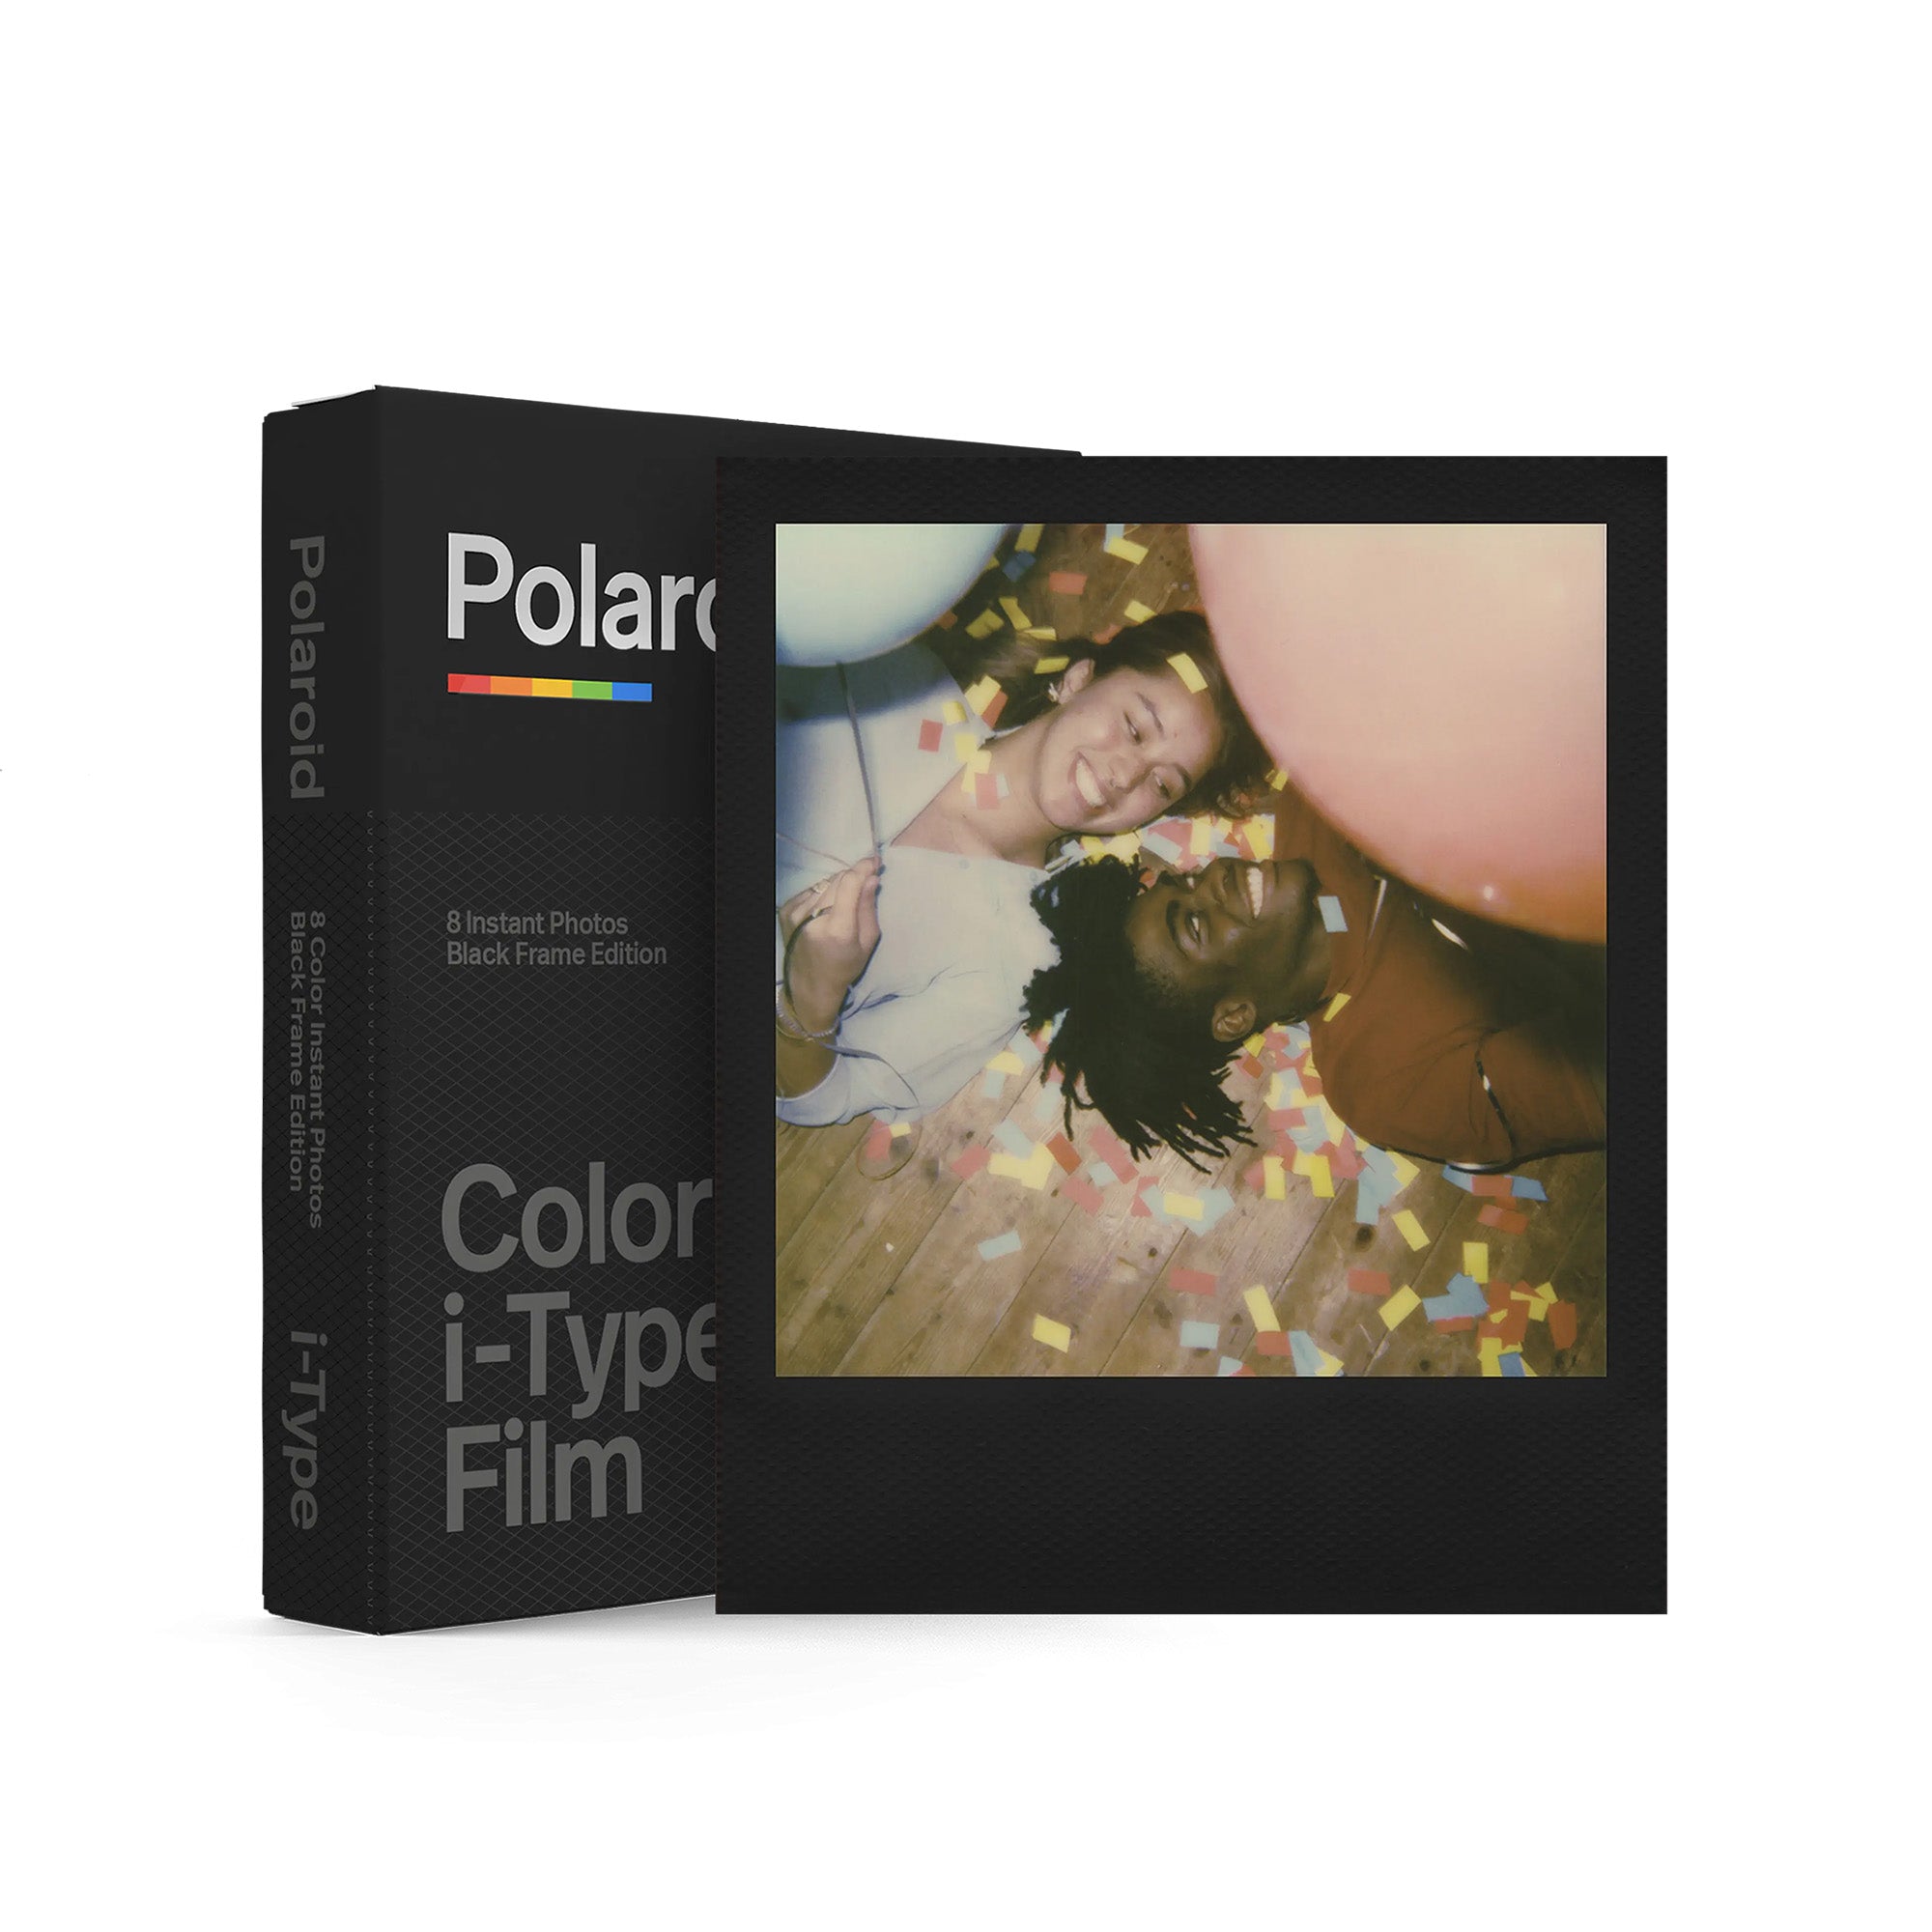 POLAROID COLOR I-TYPE FILM - BLACK FRAME EDITION